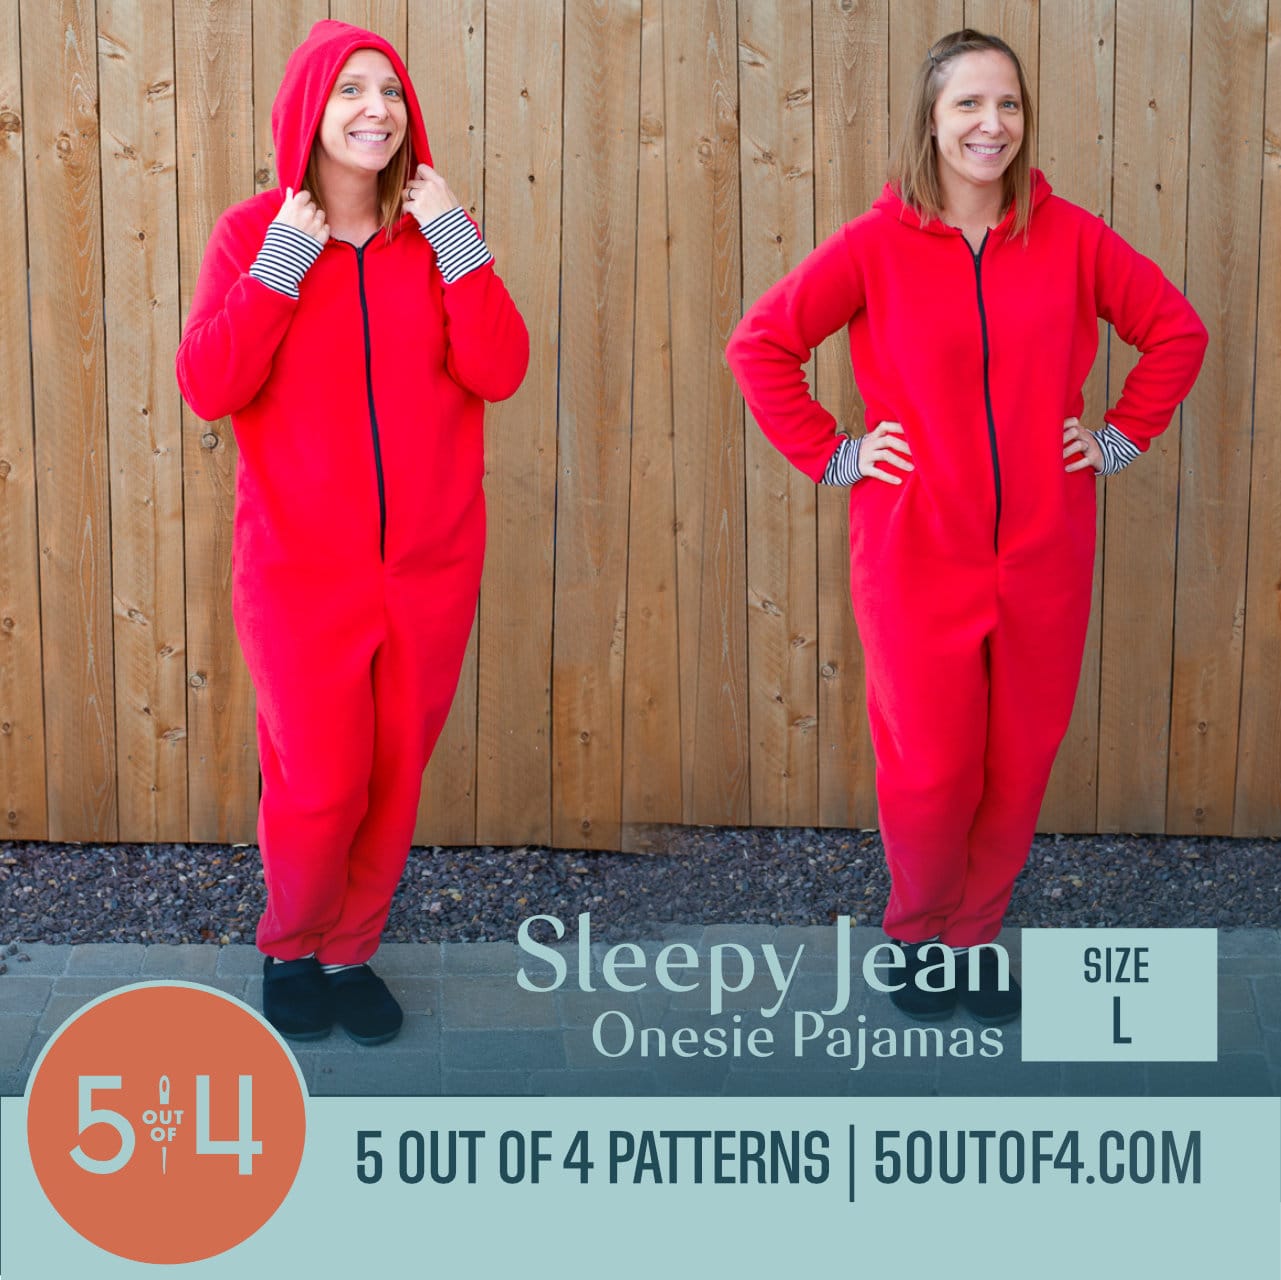 https://5outof4.com/wp-content/uploads/2020/11/Sleepy-Jean-Onesie-Pajamas-size-L.jpg